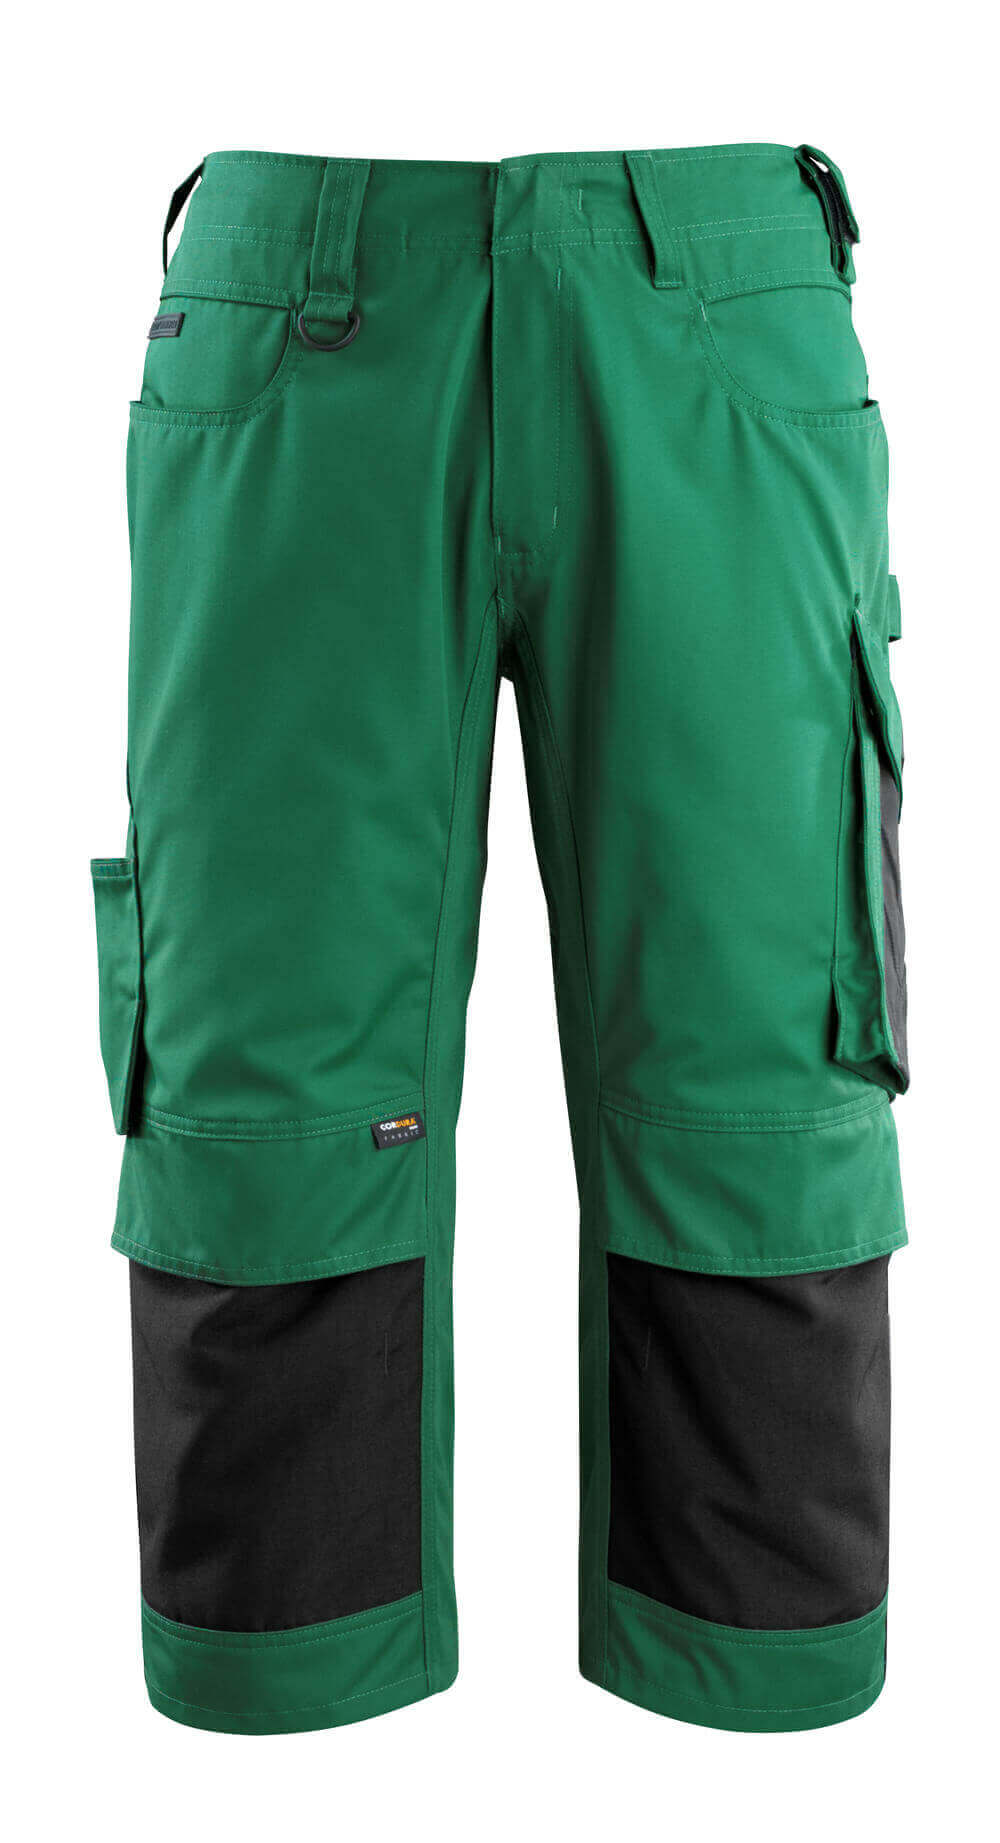 Mascot UNIQUE  Altona ¾ Length Trousers with kneepad pockets 14149 green/black